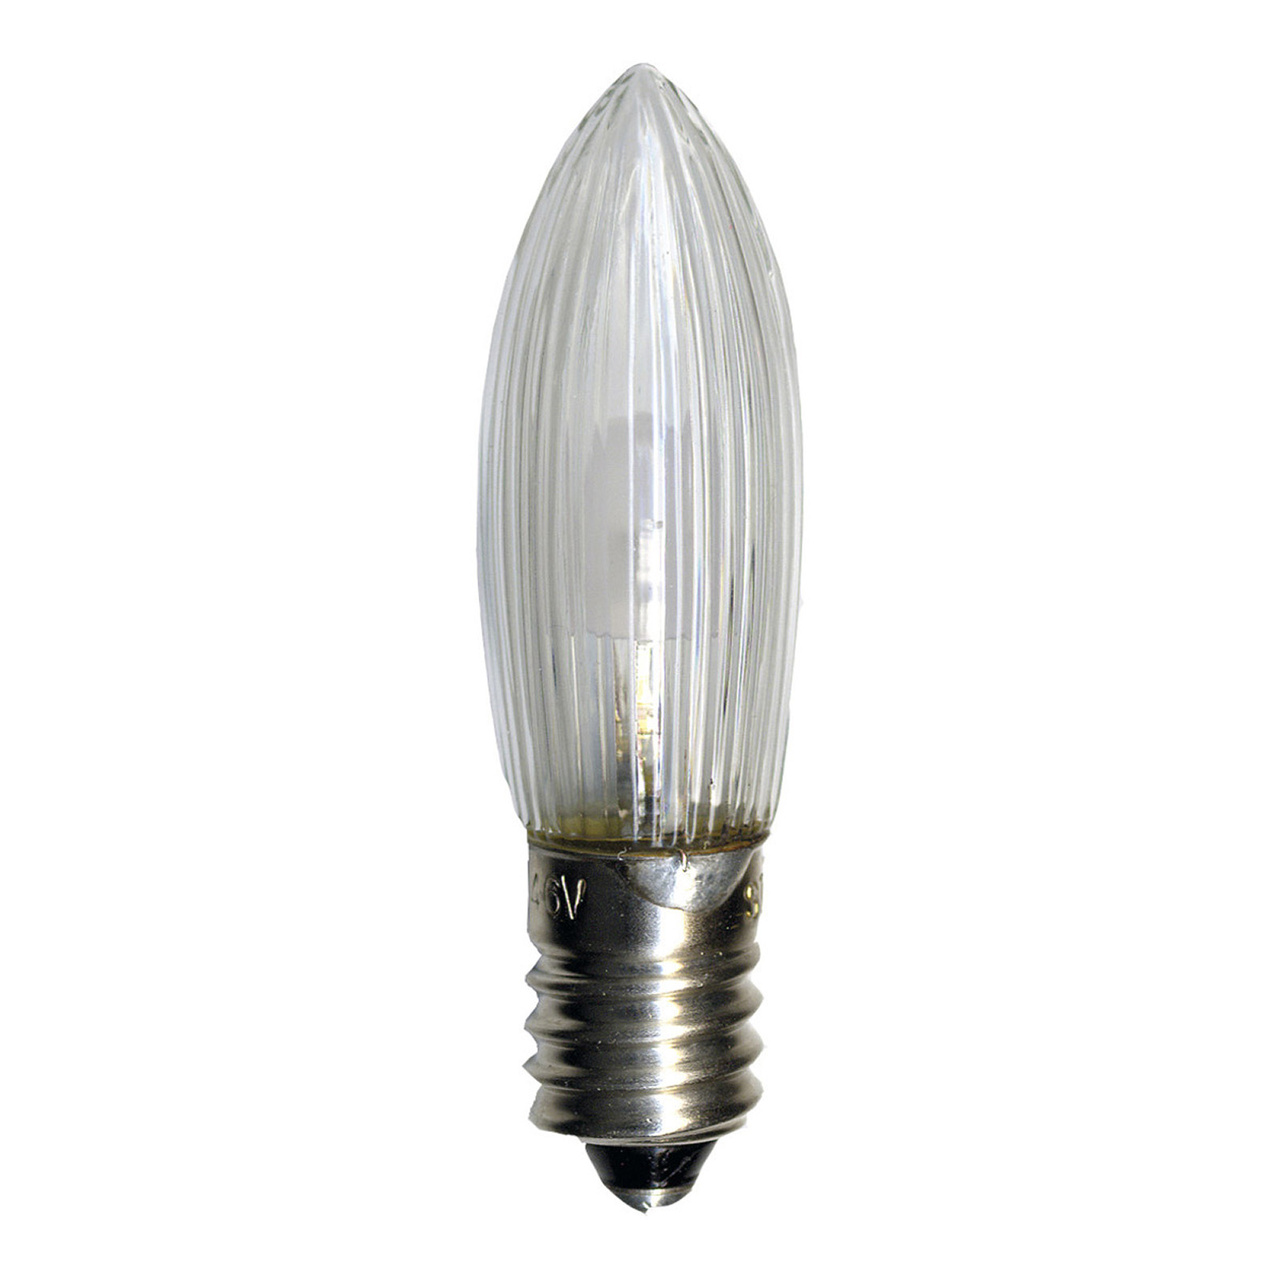 LED-lampa E10 0,2W 7-pack